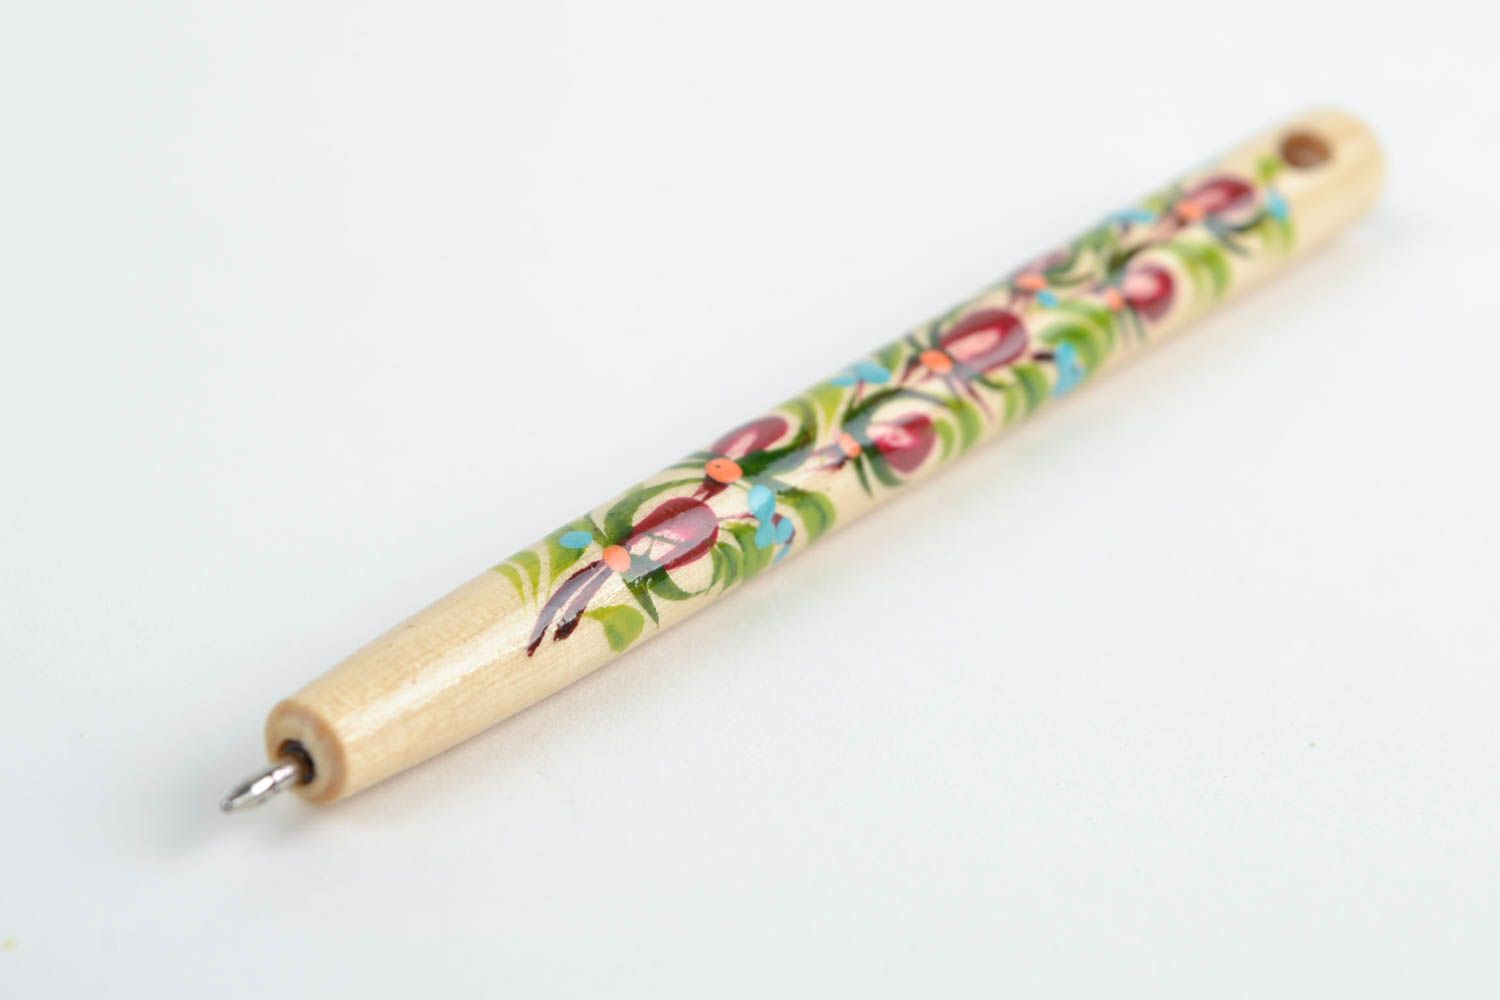 Handmade pen wooden pen unusual gift wooden whistle unusual souvenir painted pen photo 4